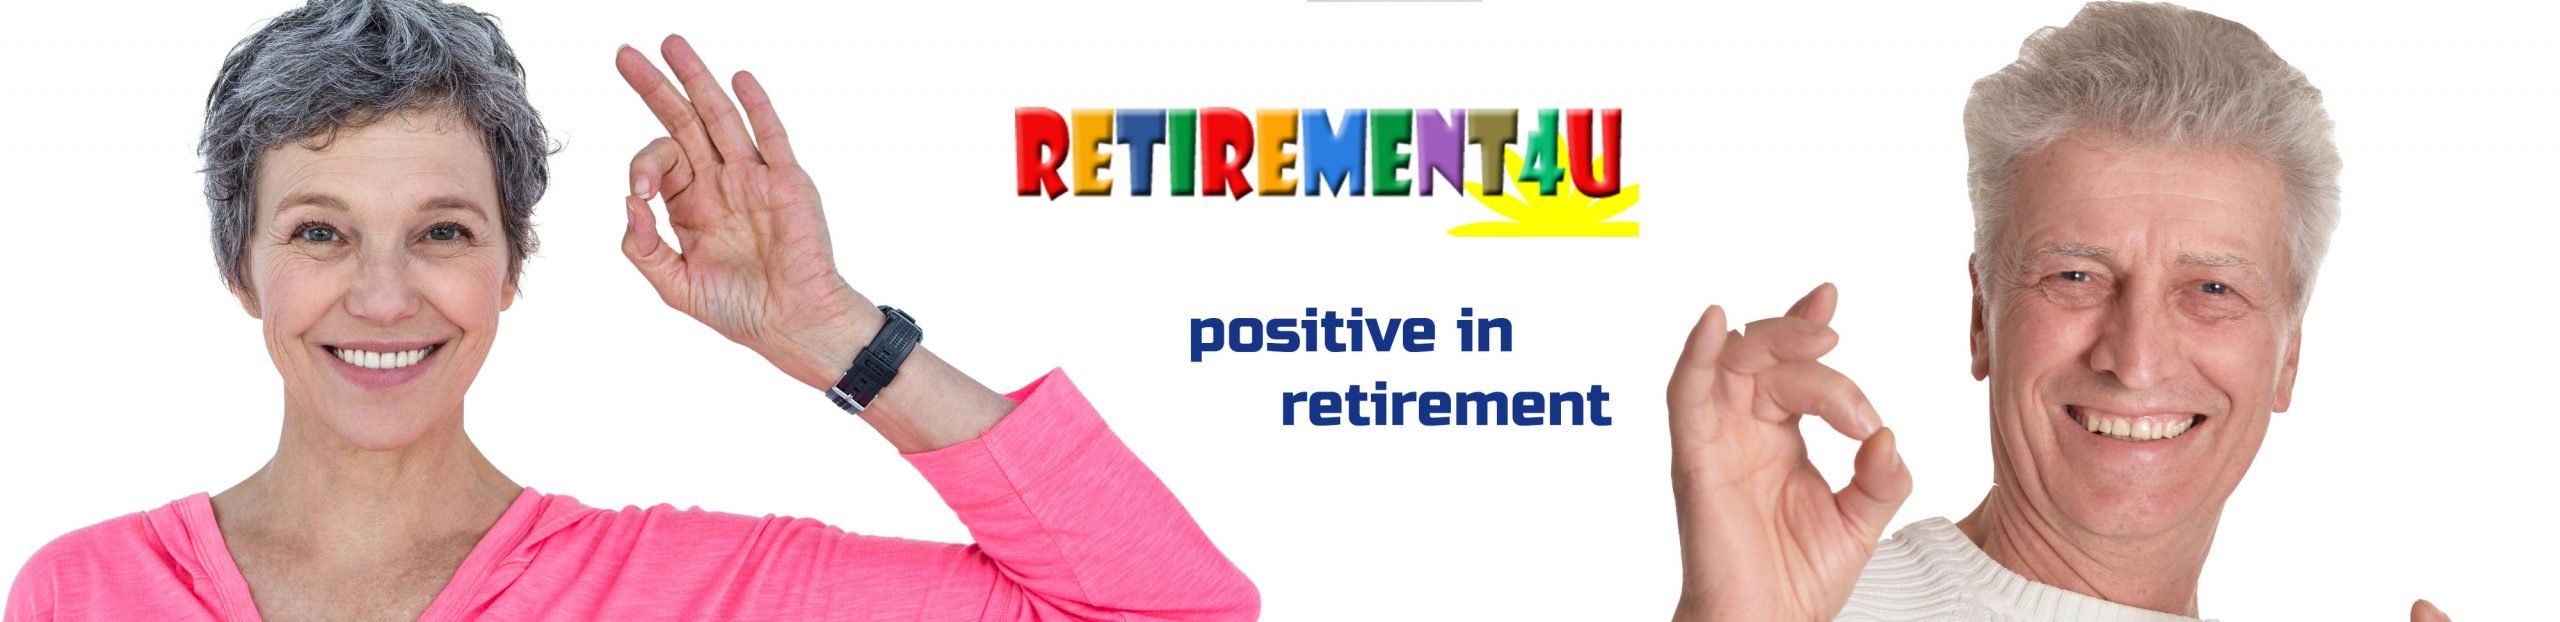 retirement - be positive